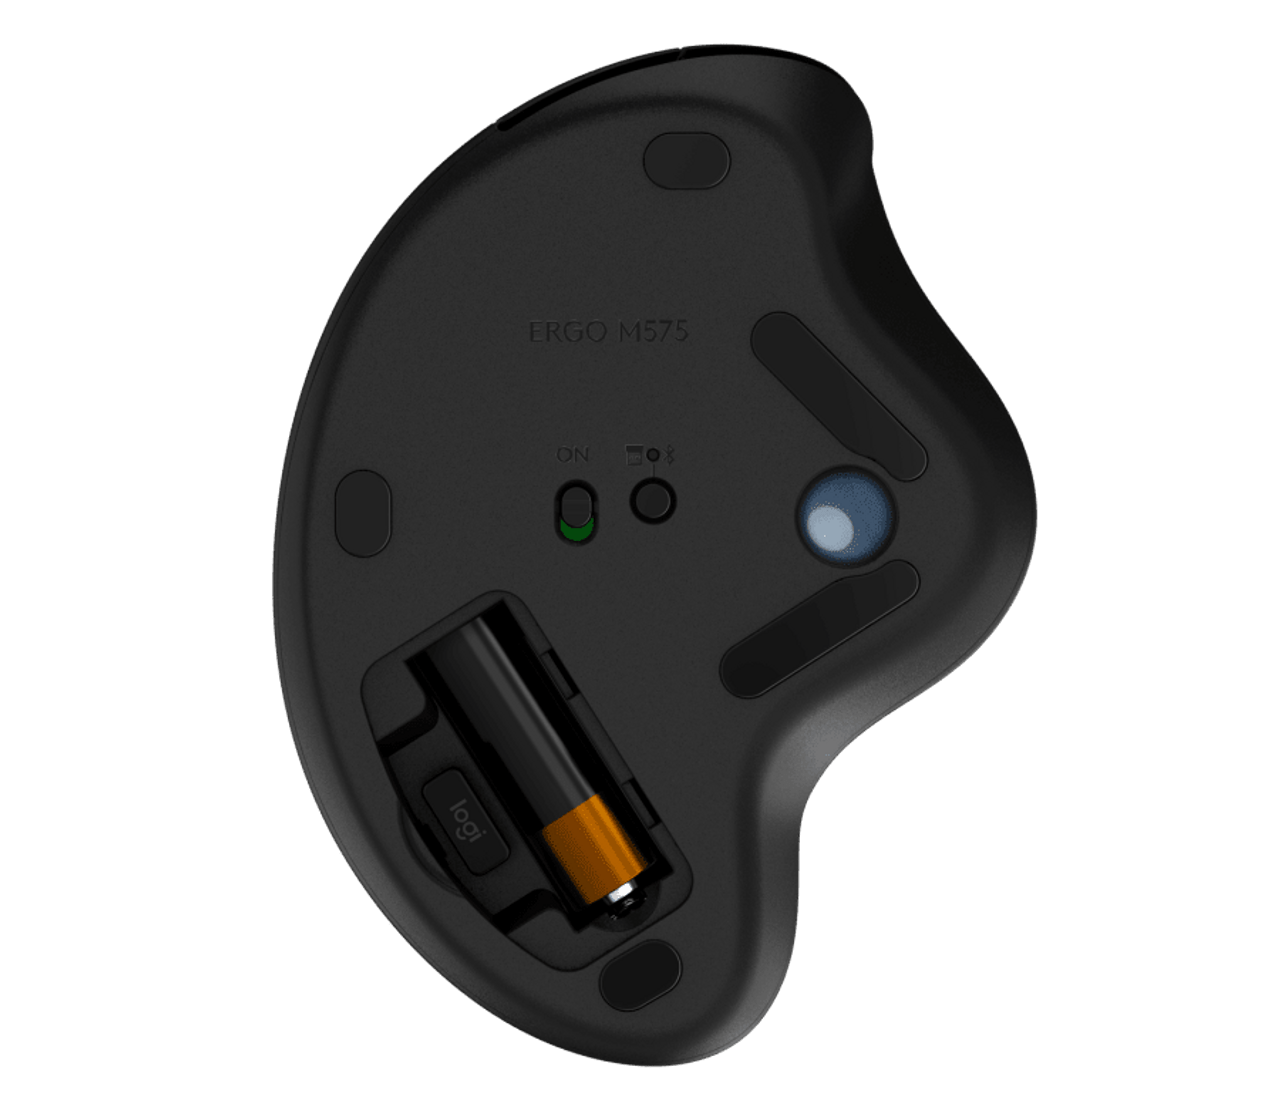 Logitech Ergo M575 Wireless Trackball - Black